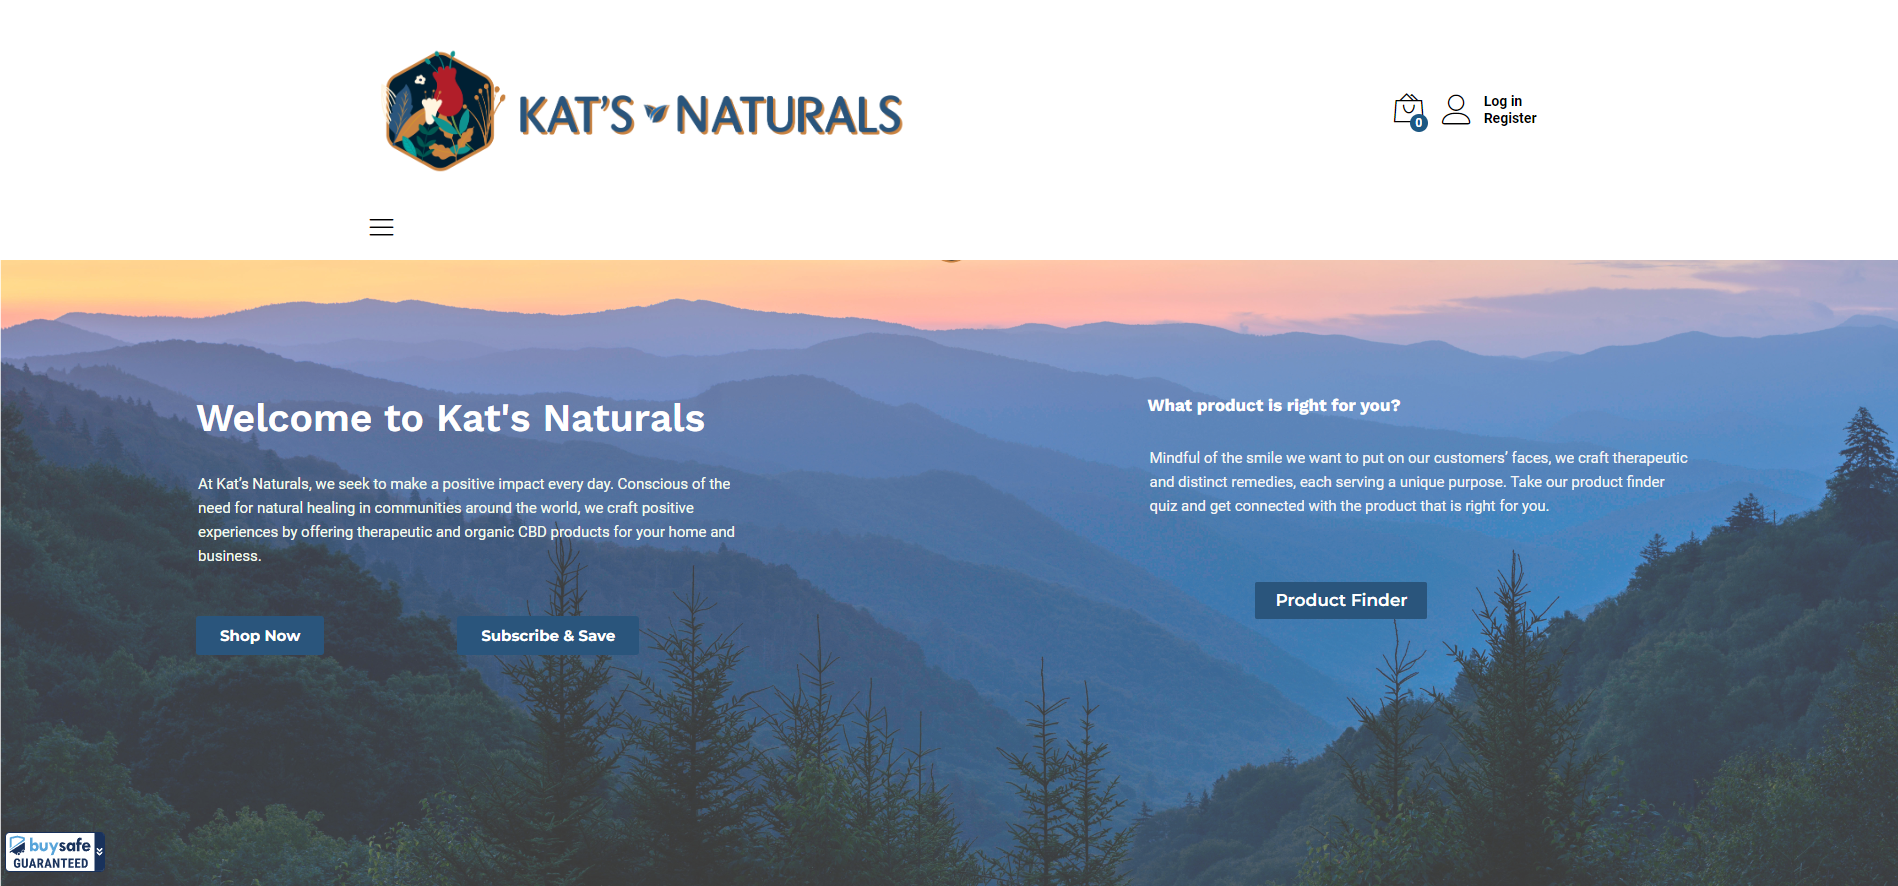 Kat's Naturals Affiliate Program Homepage Image